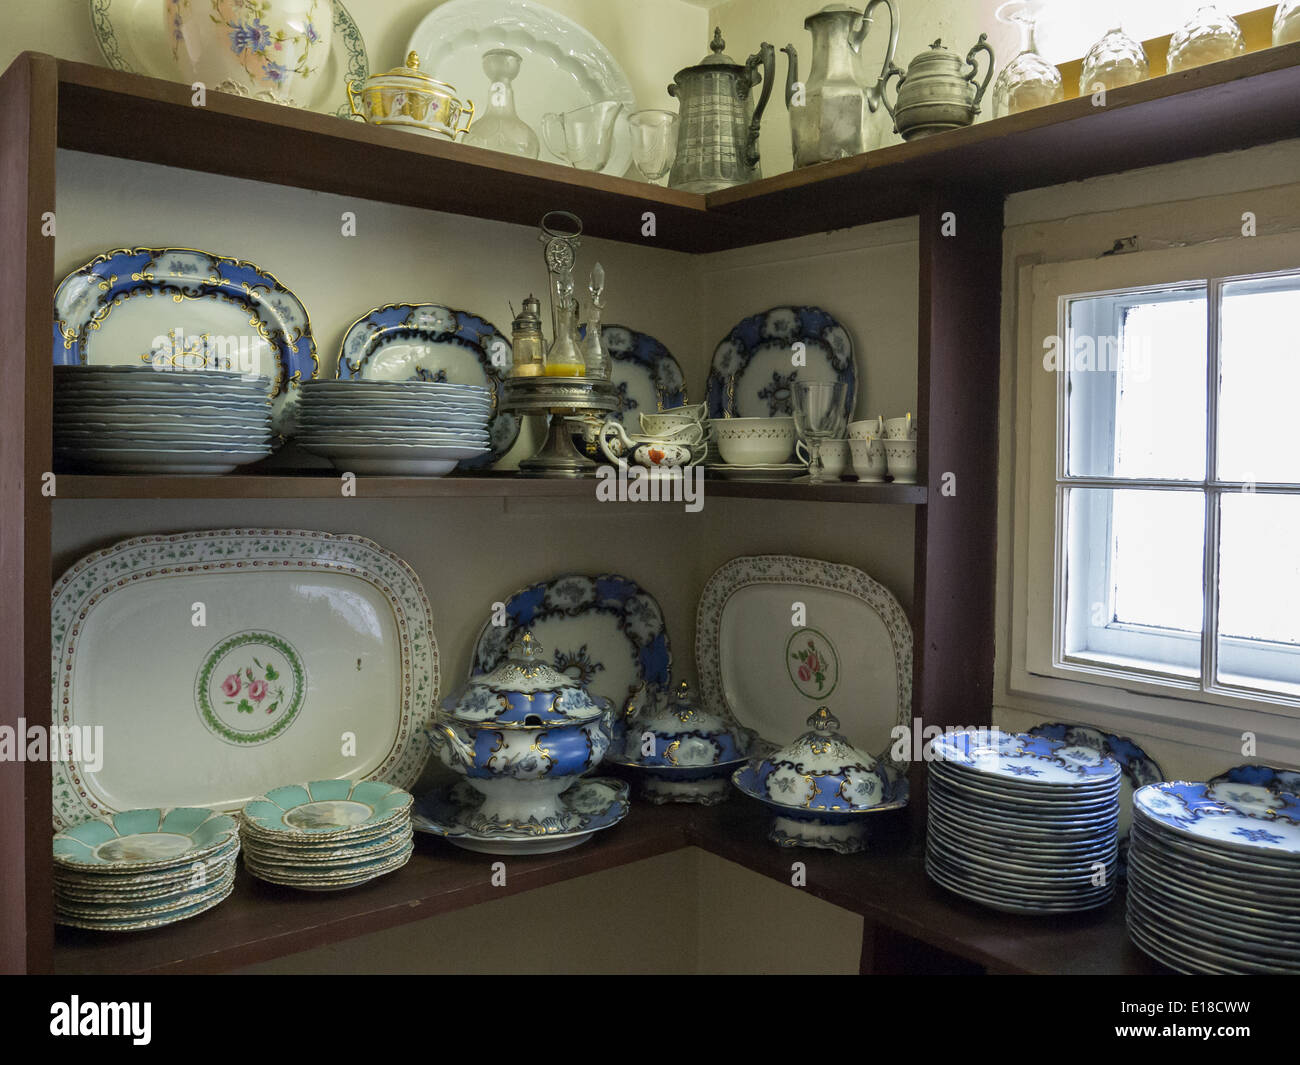 vintage kitchenware plate bowl on wooden shelf at colborne lodge Stock Photo